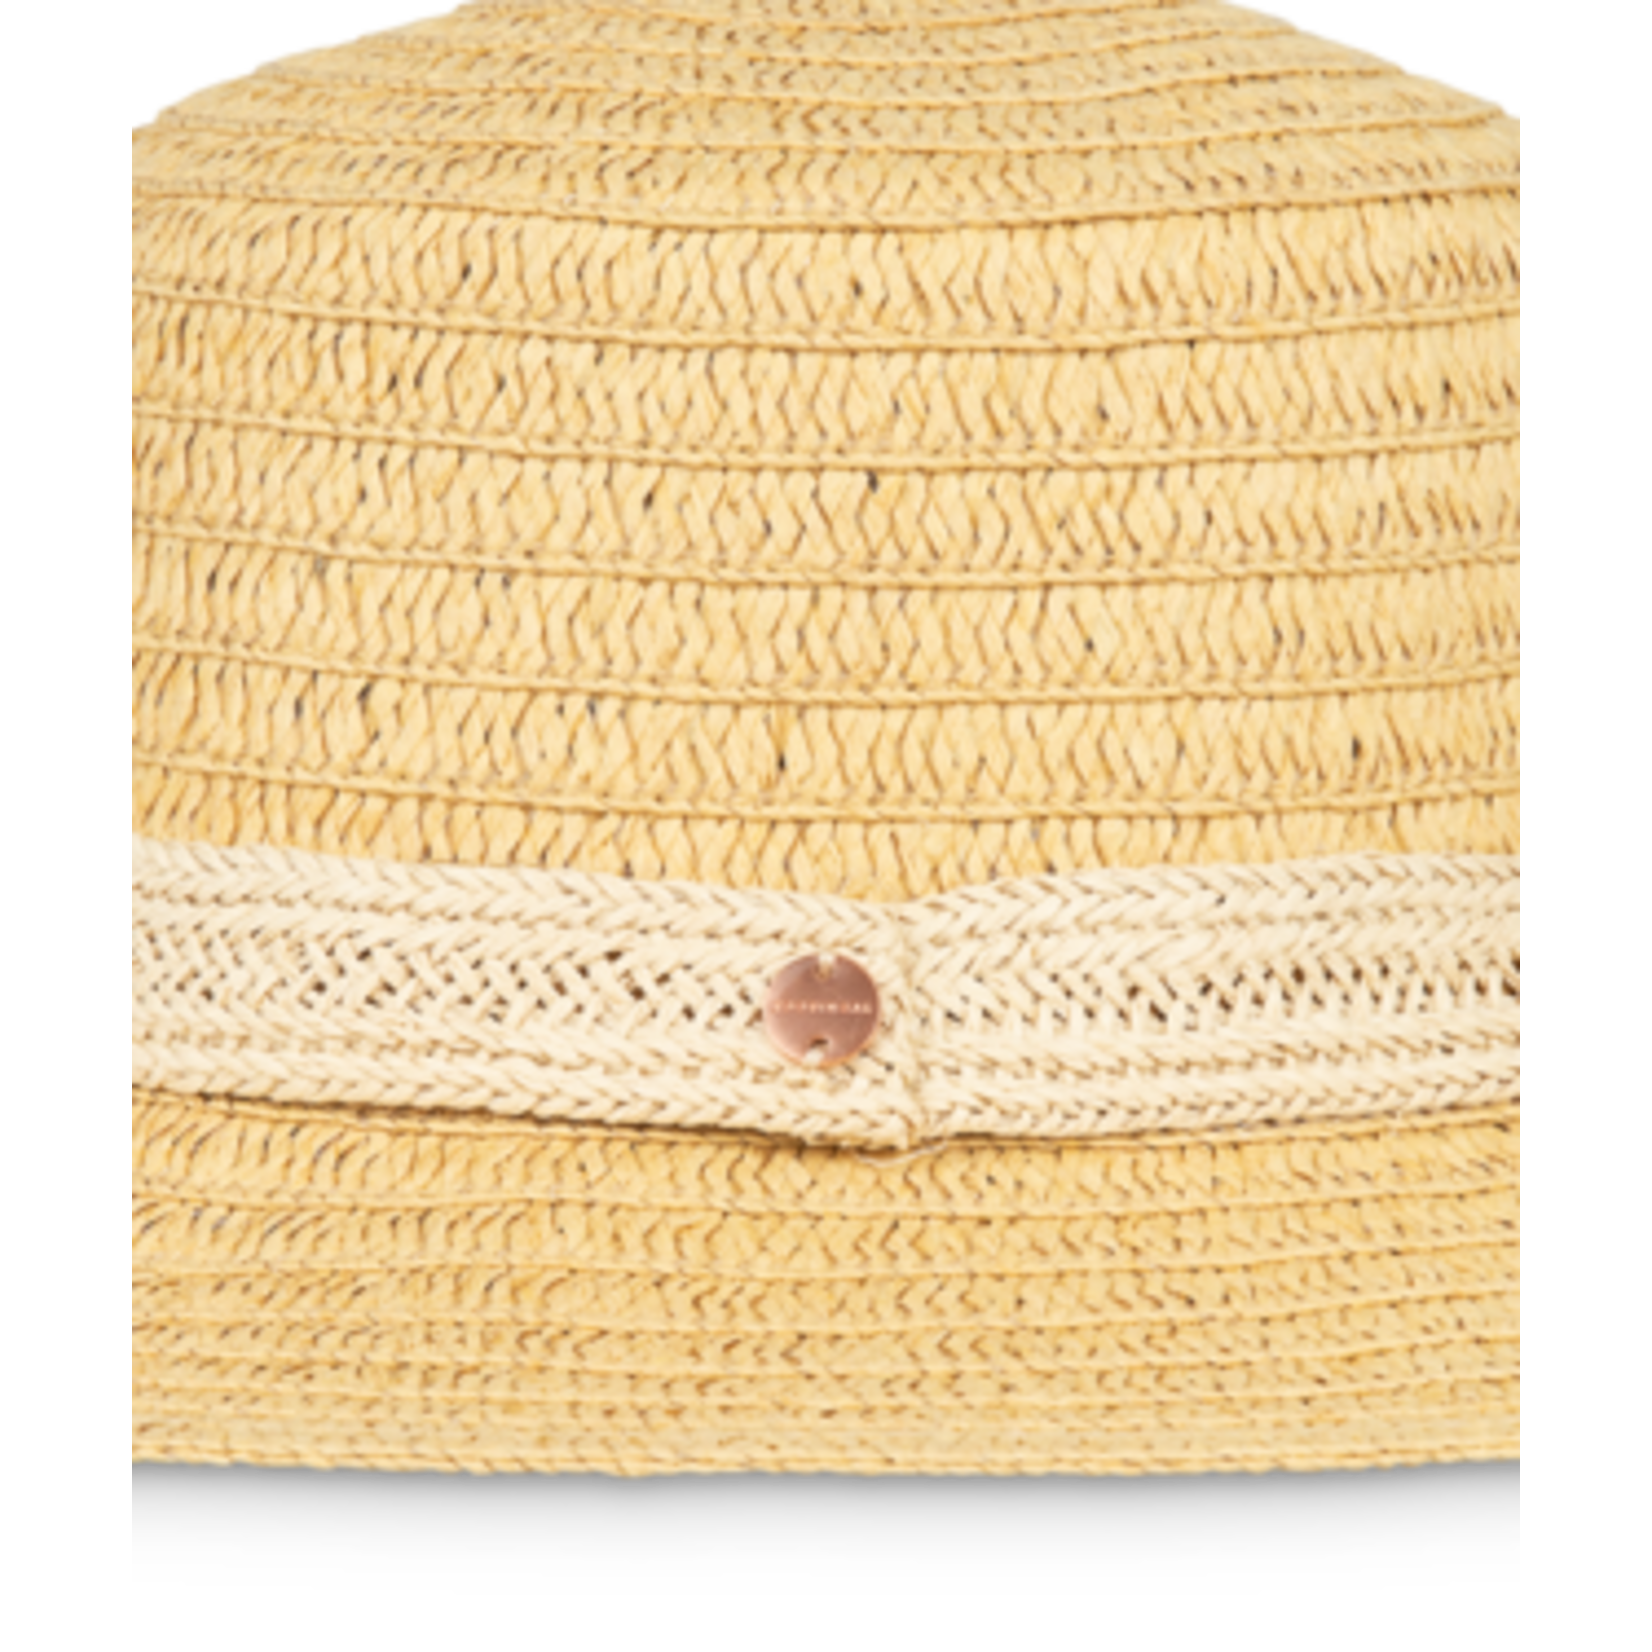 Wide Brim Natural Boater Hat - Adalita